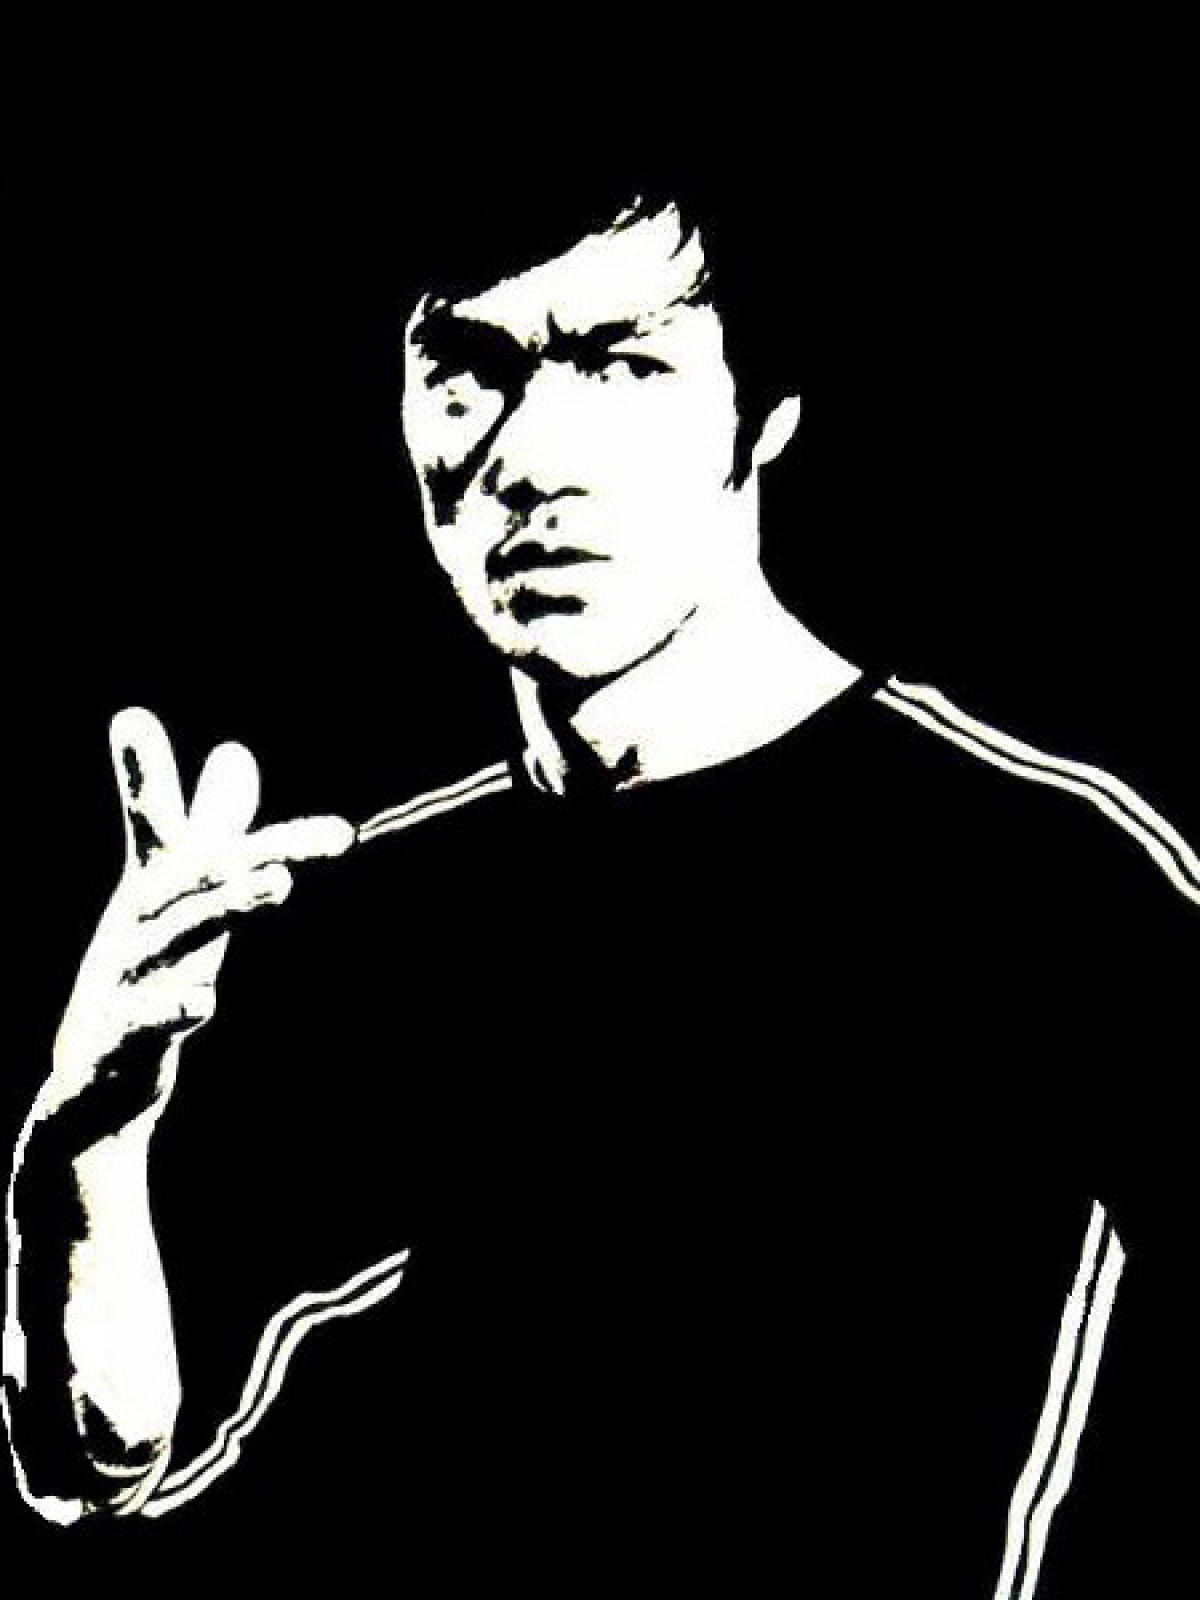 Bruce Lee Mobile Wallpaper Hd - 1200x1600 Wallpaper 